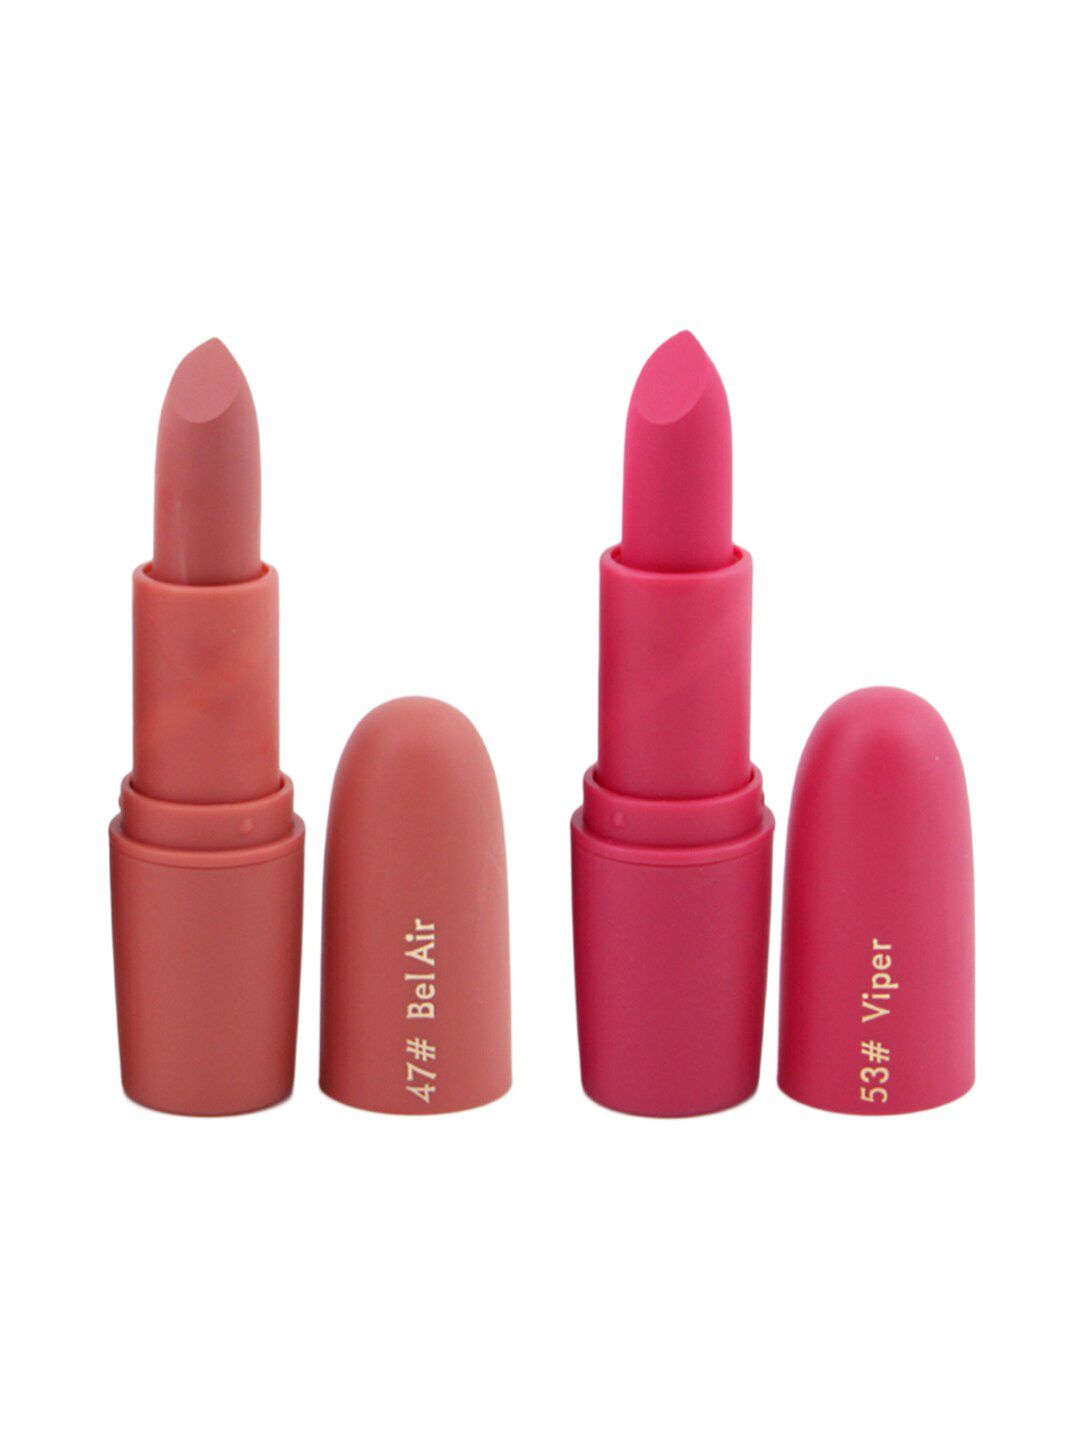 MISS ROSE Set of 2 Matte Creamy Lipsticks - Bel Air 47 & Viper 53 Price in India